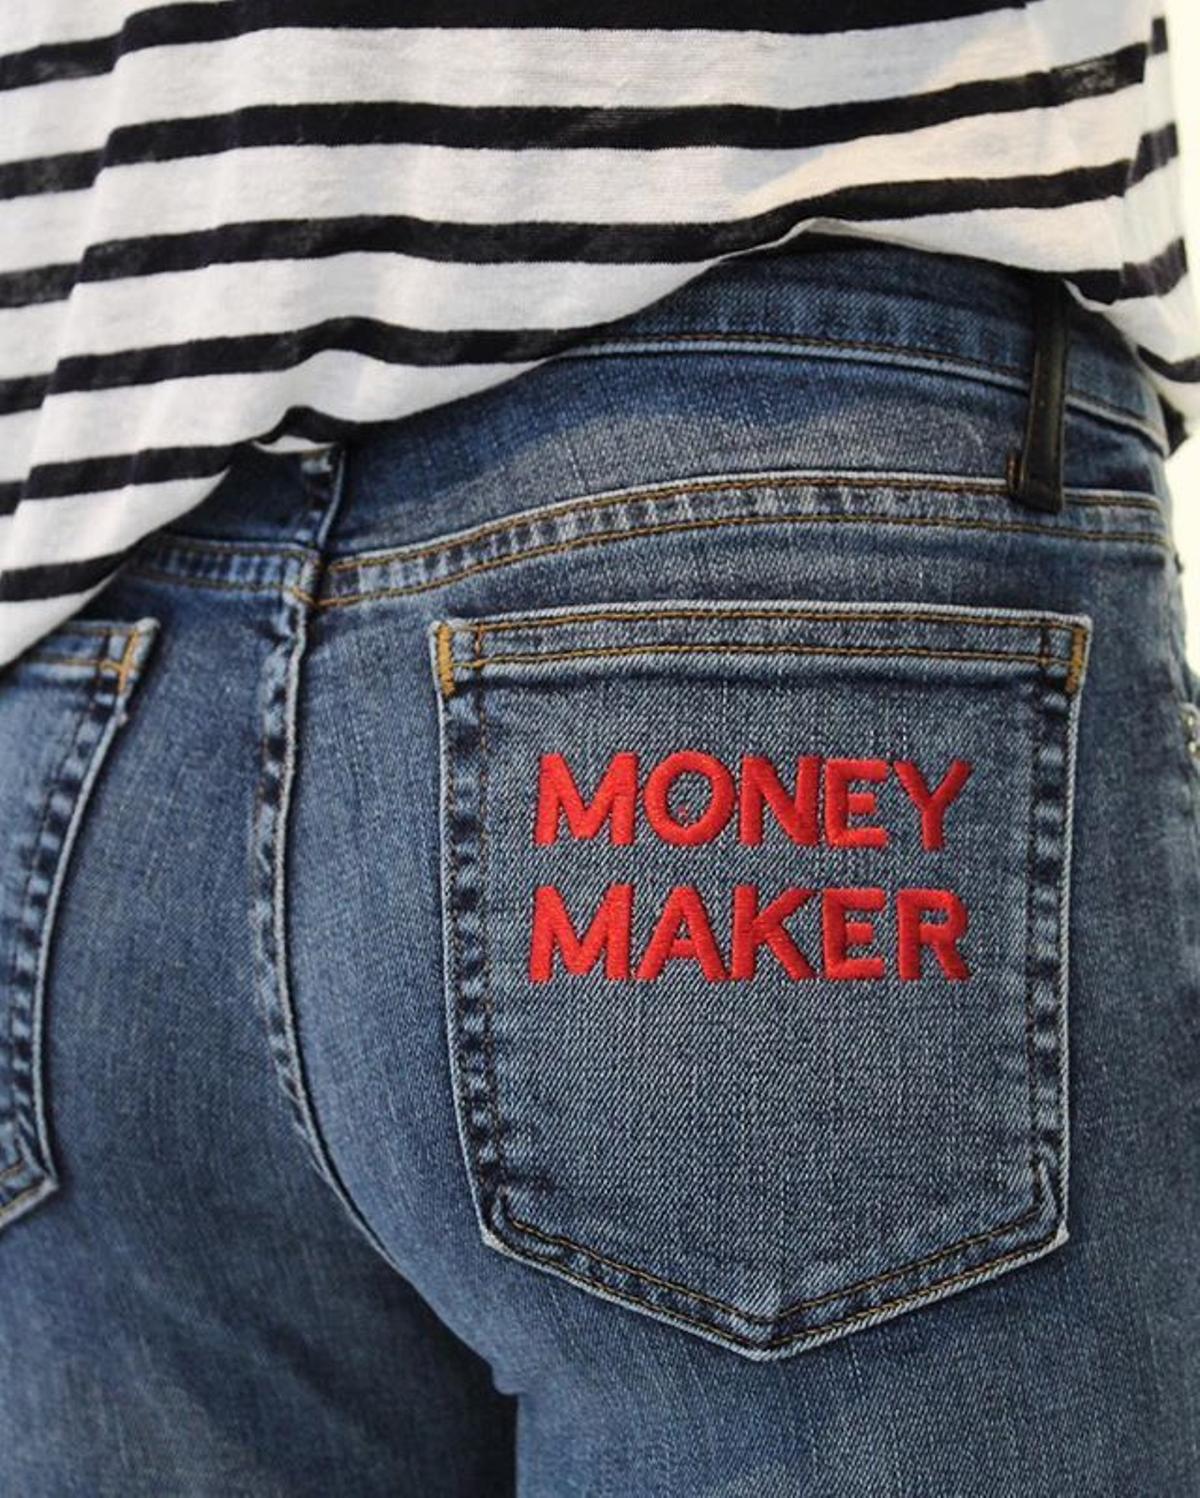 Jeans 'Money maker' de la colección O/I 2016 de Alexander Wang